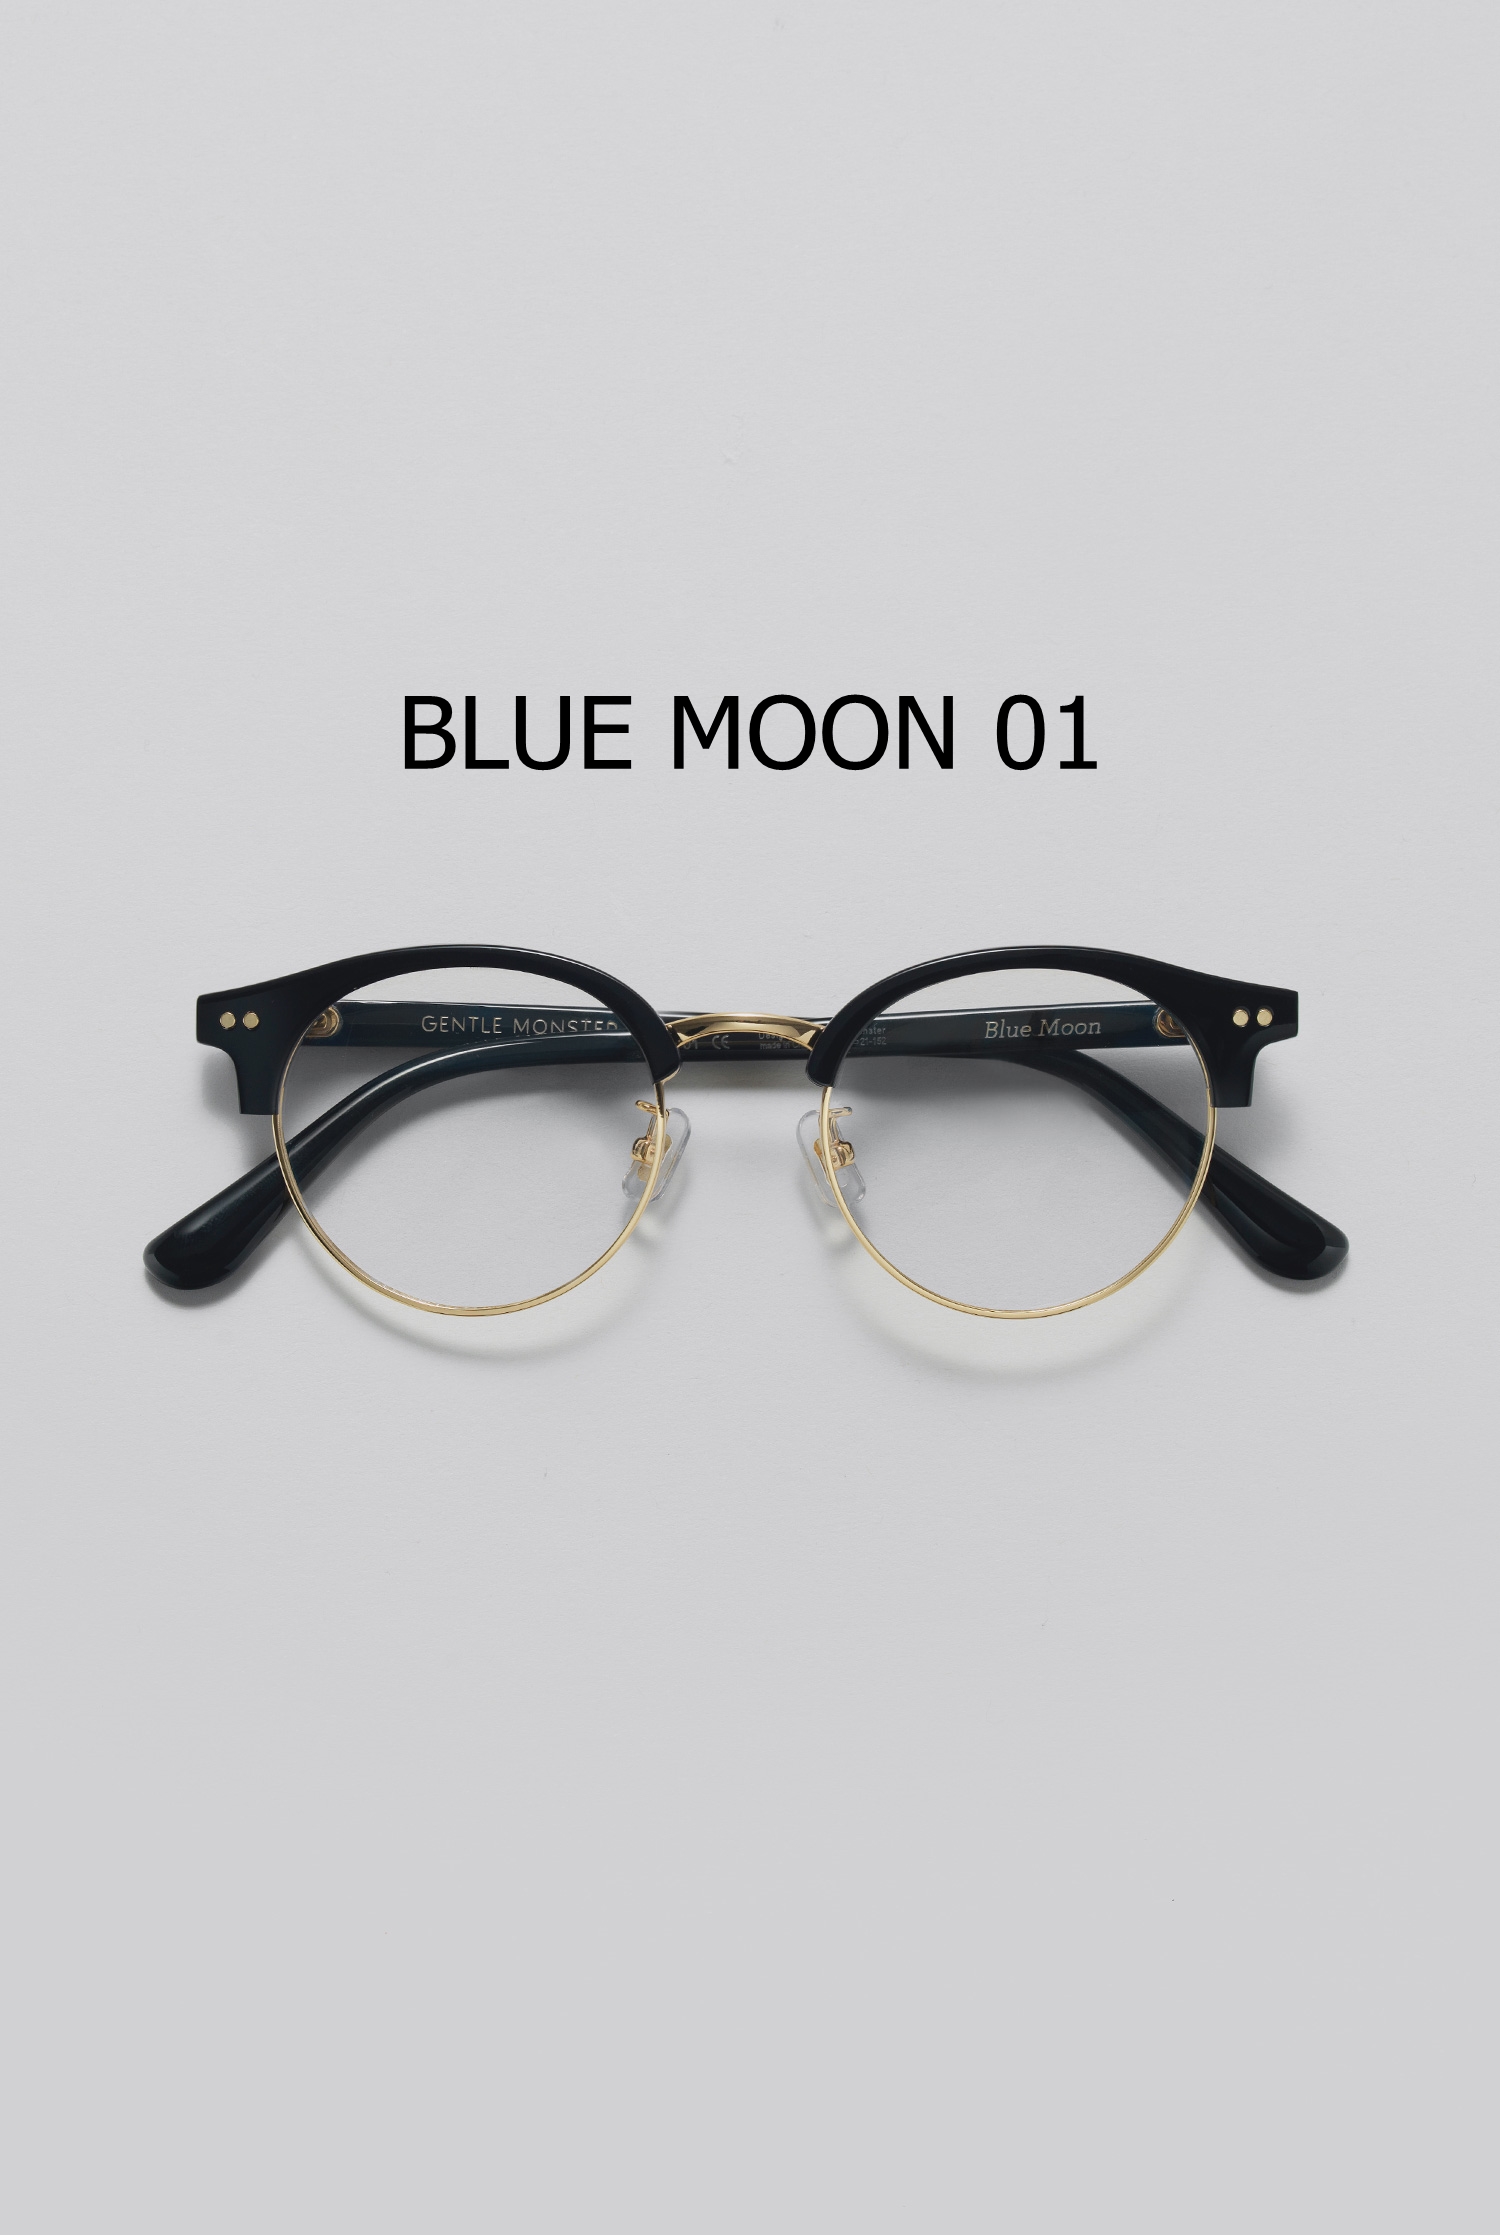 BLUE MOON 01 